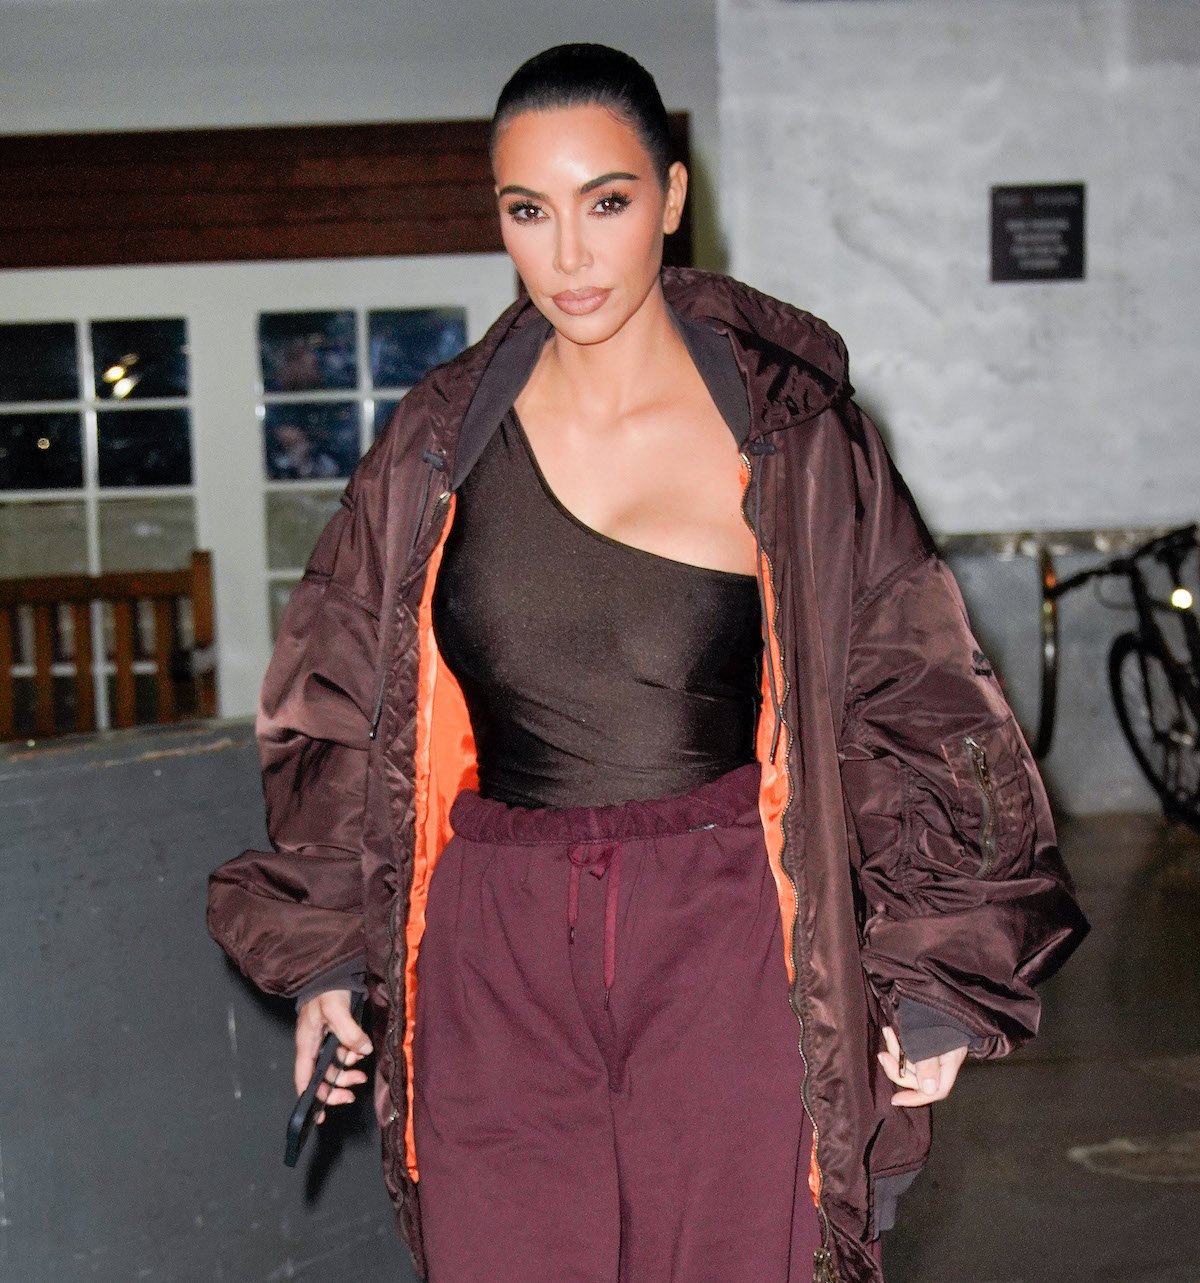 Kim Kardashian West is photographed walking down a street.